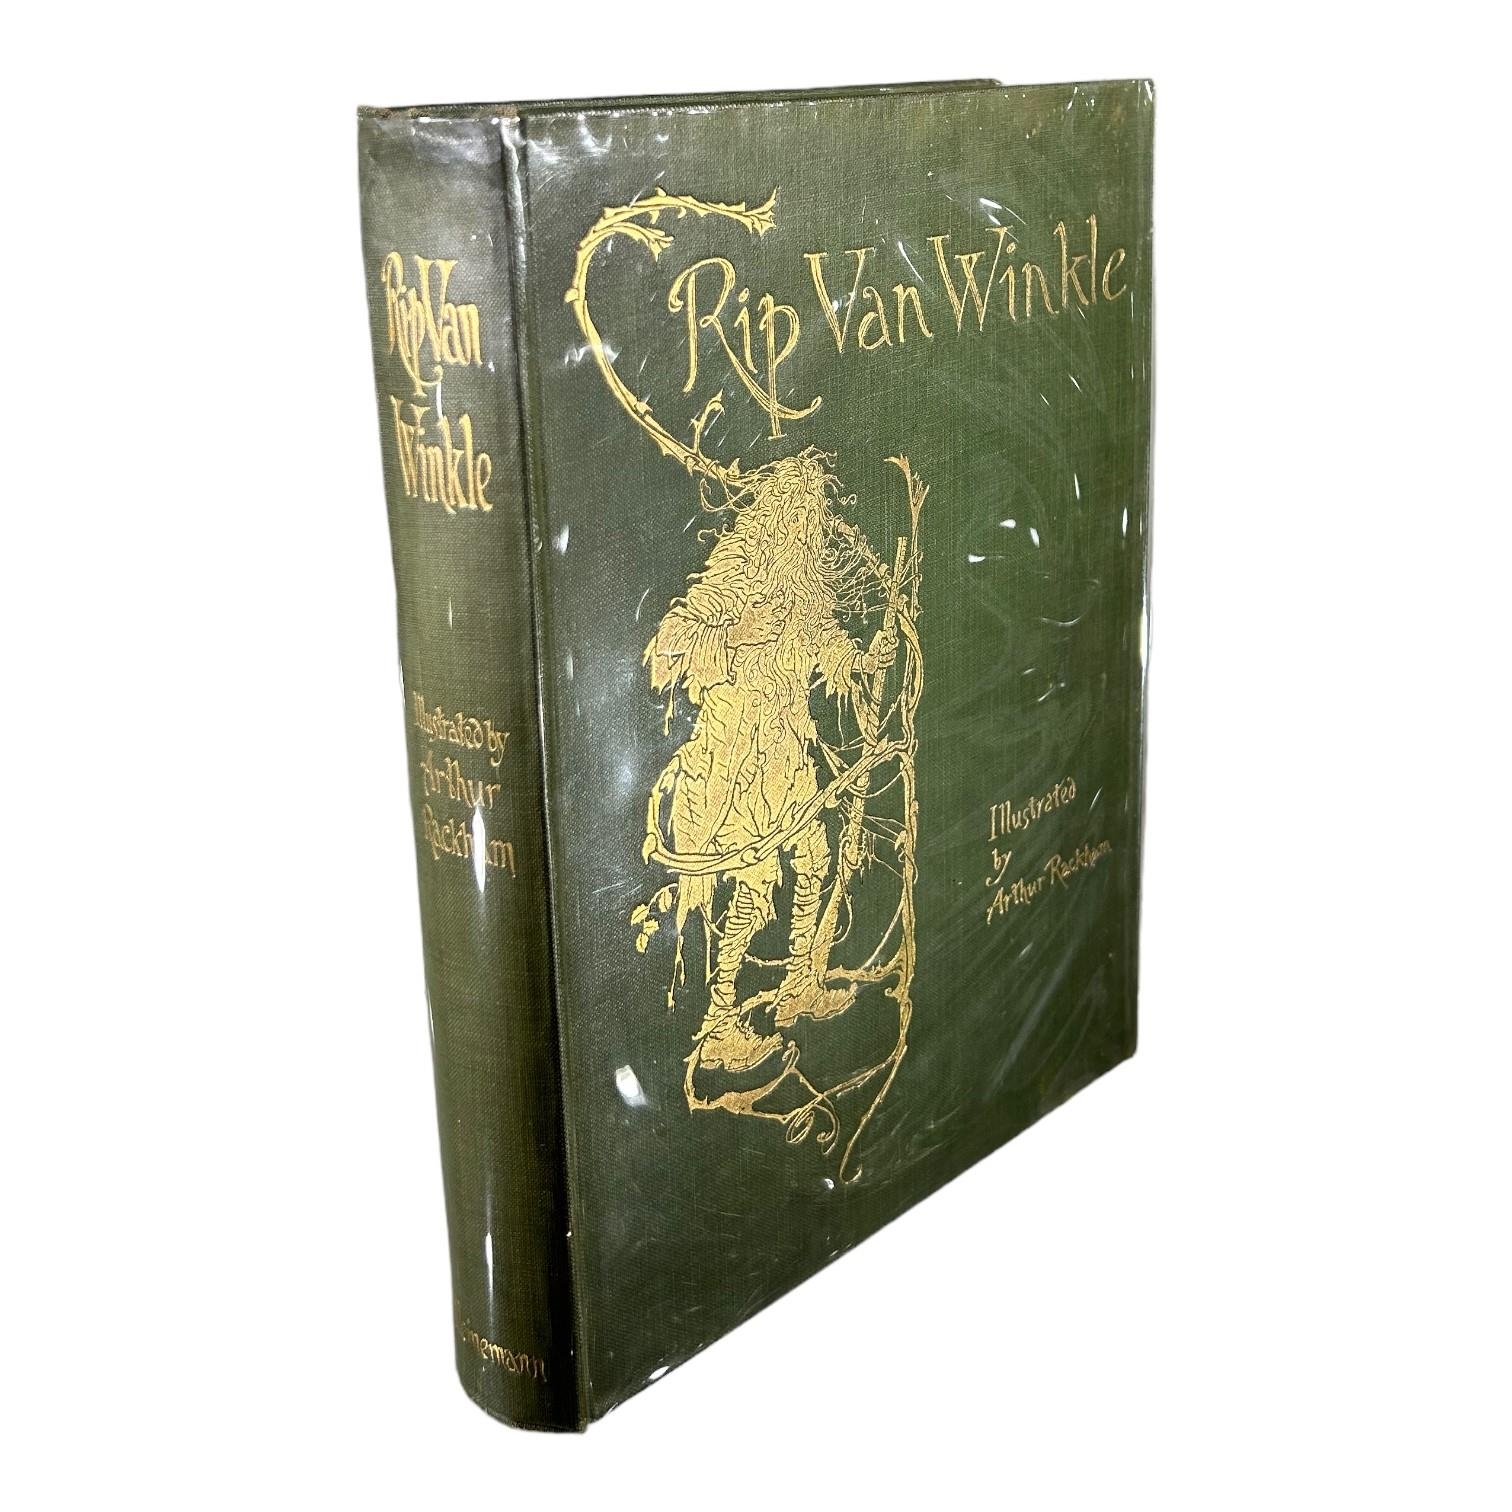 WASHINGTON IRVING, ILLUSTRATED BY ARTHUR RACKHAM. RIP VAN WINKLE BOOK, 2ND IMPRESSION, 1905